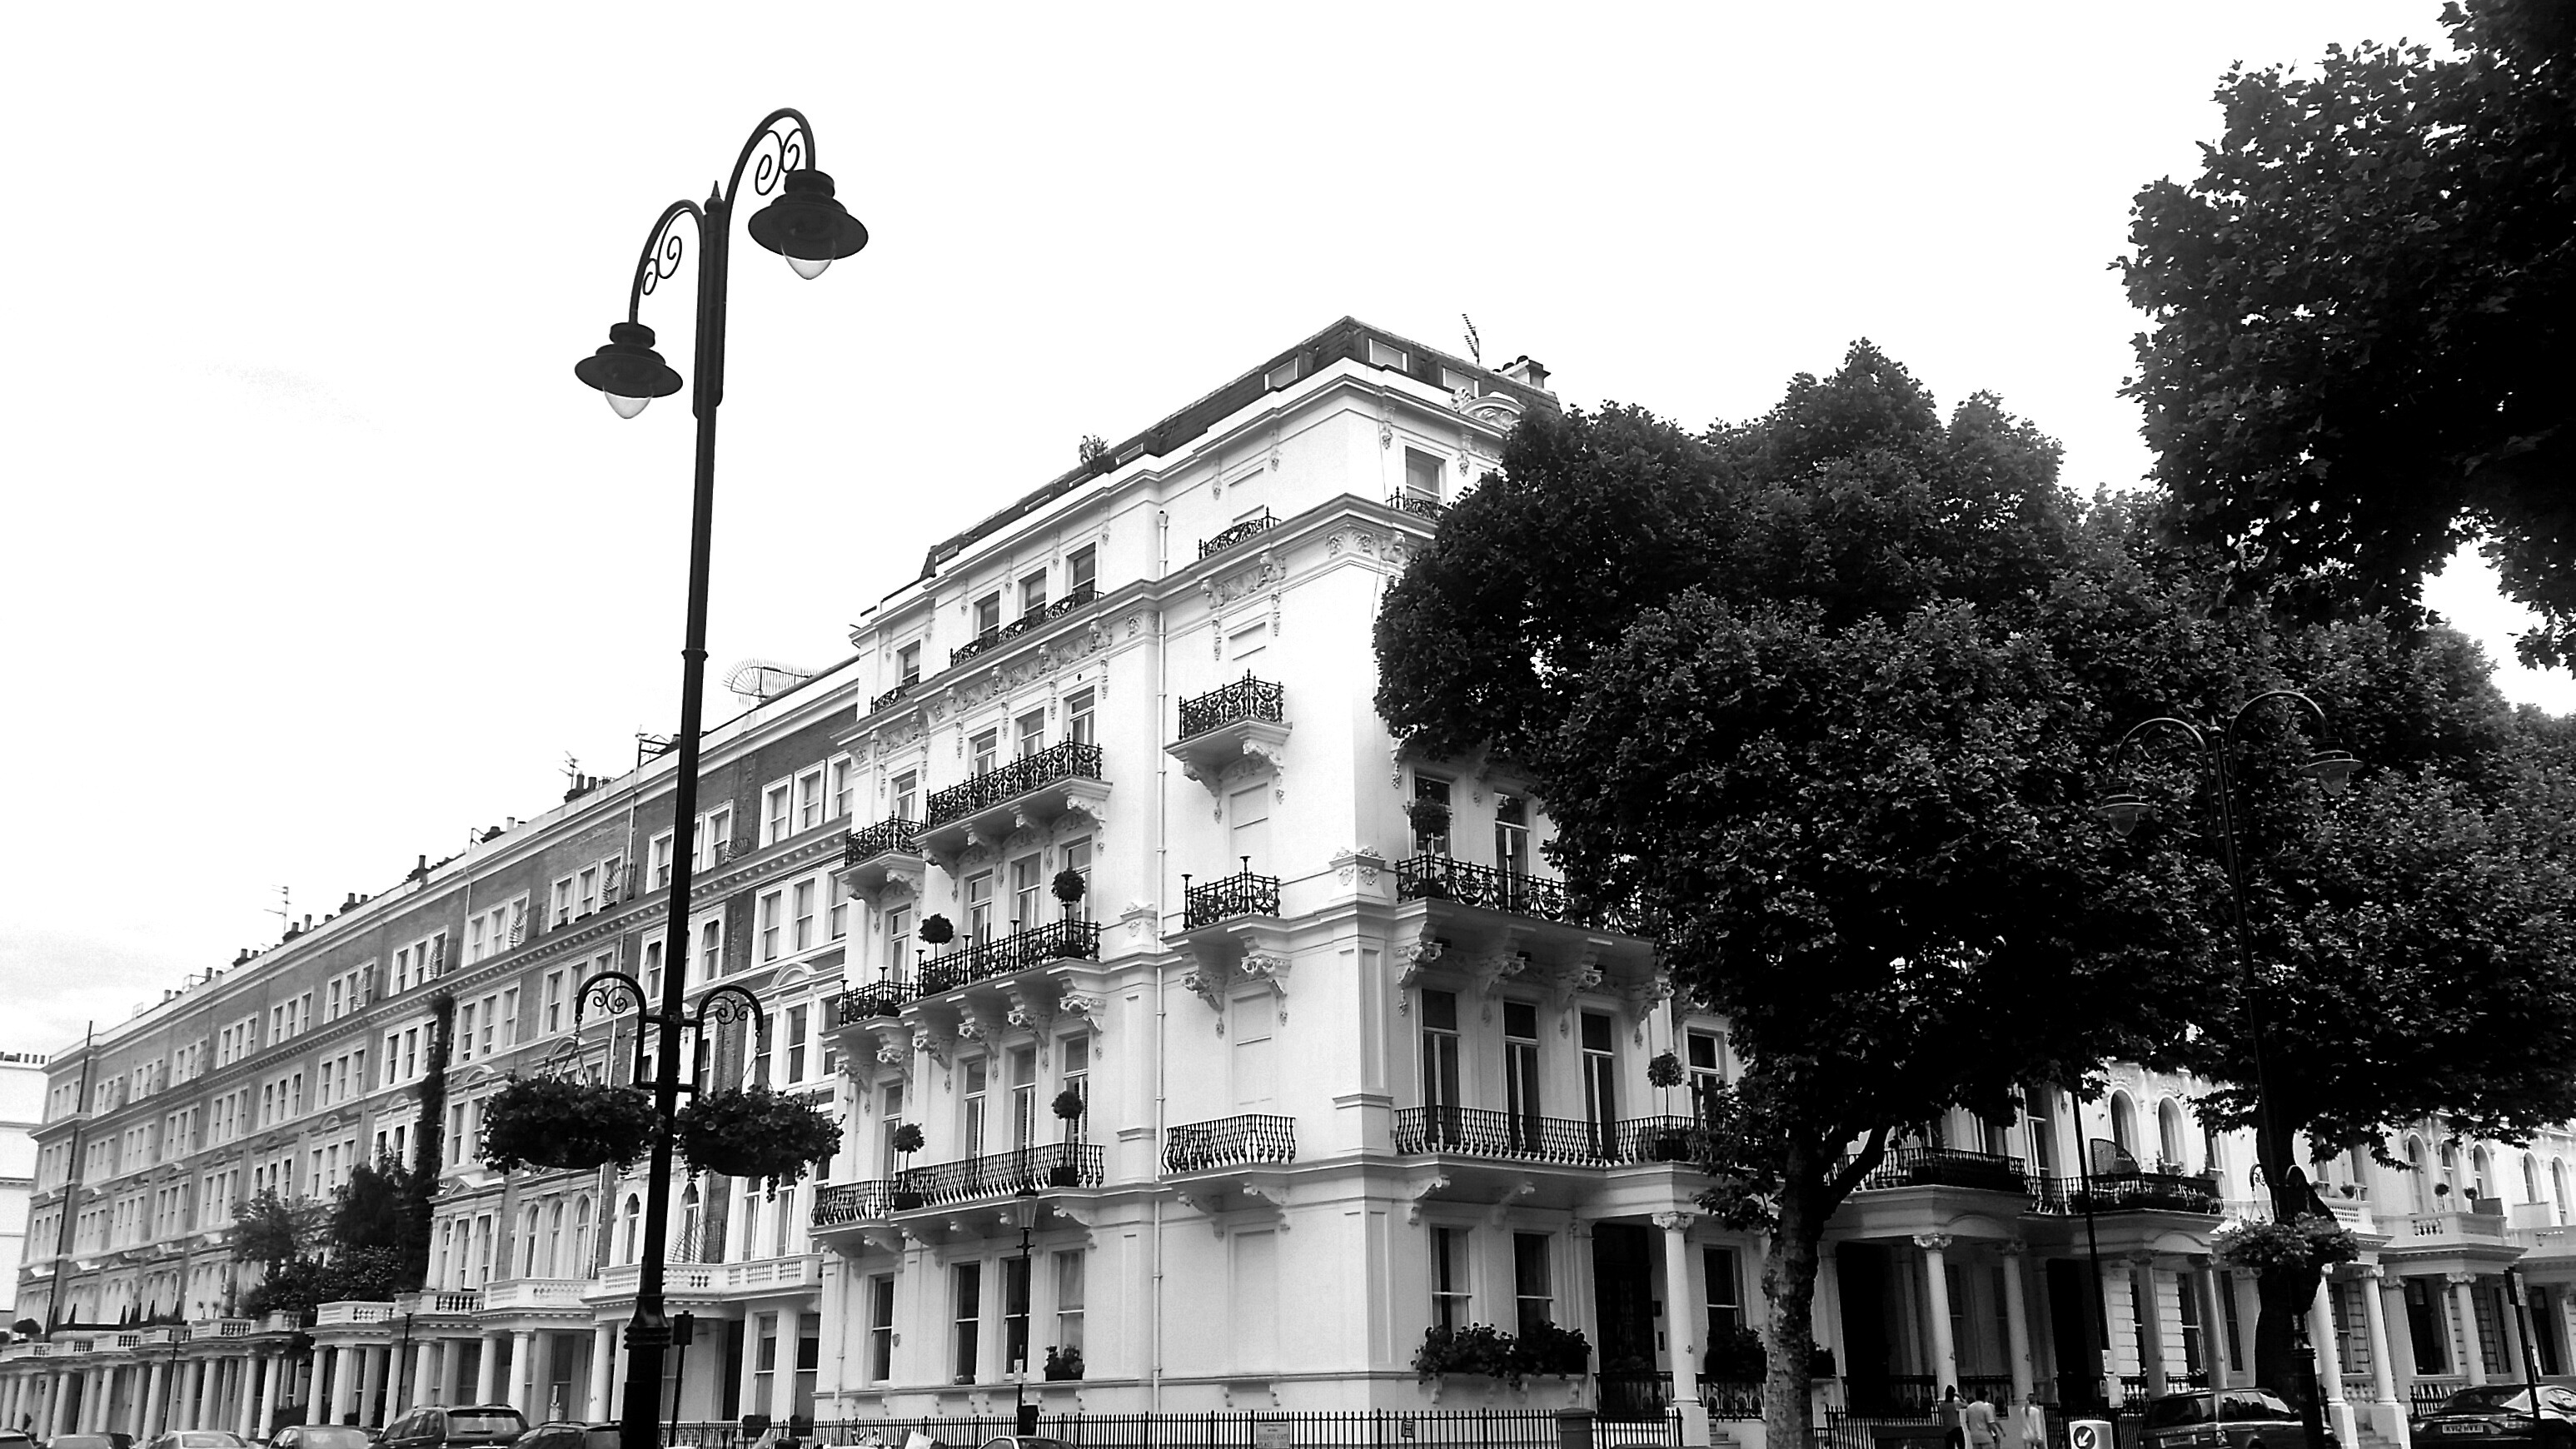 Astor Hyde Park Review - Streets of Kensington